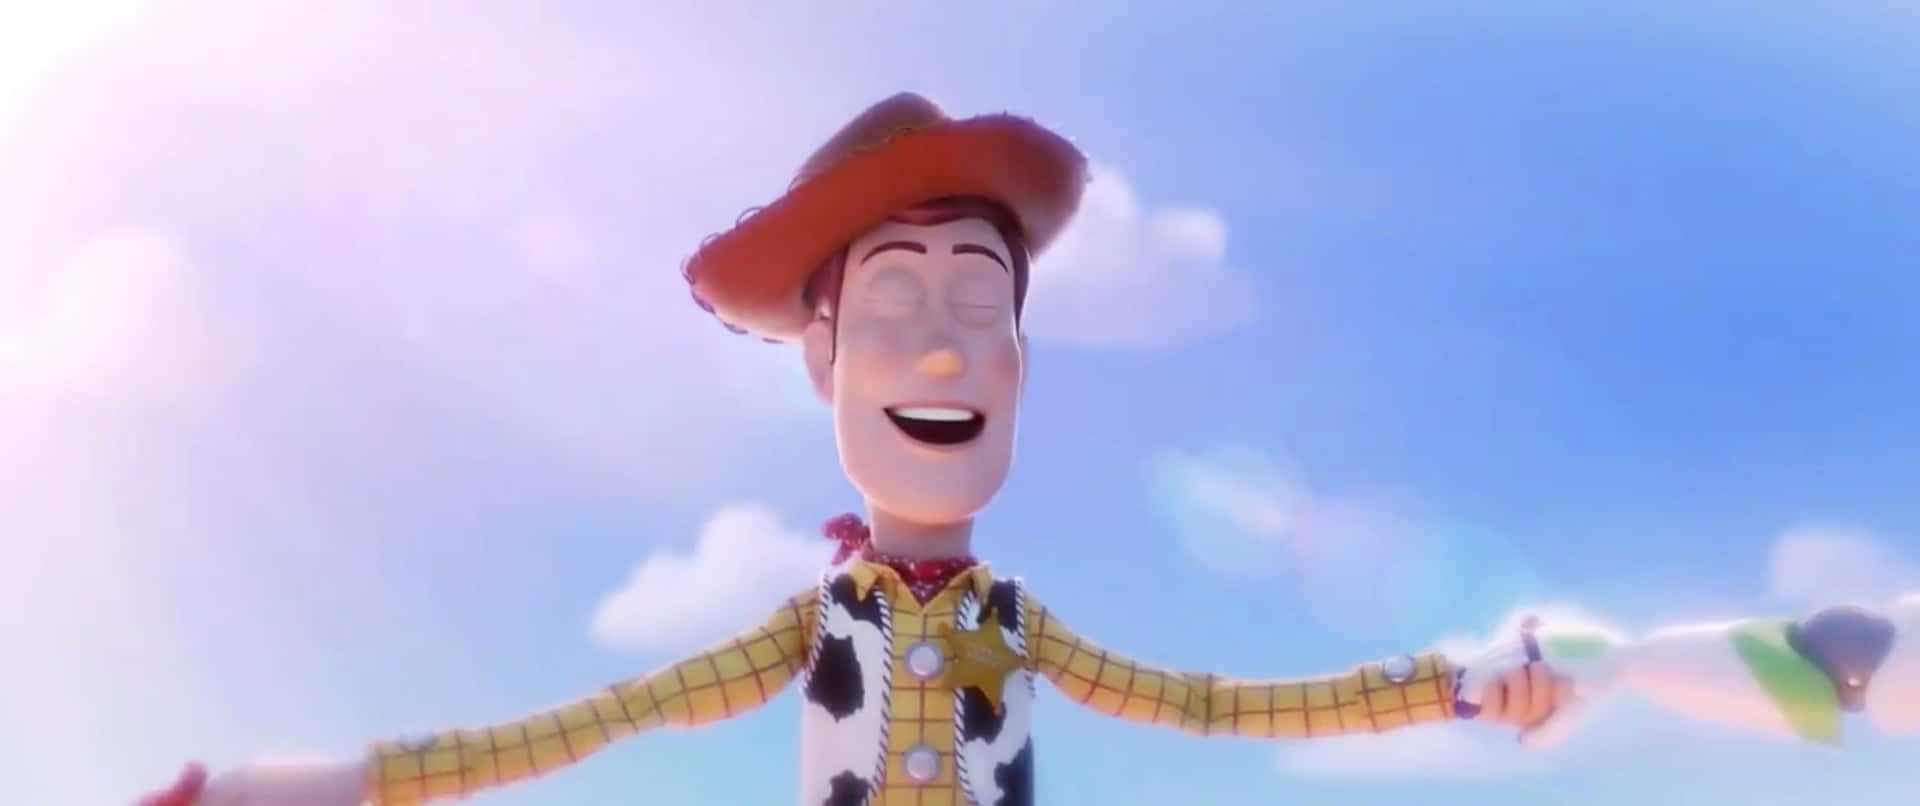 L'emozionecresce Per L'anteprima Di Toy Story 4!